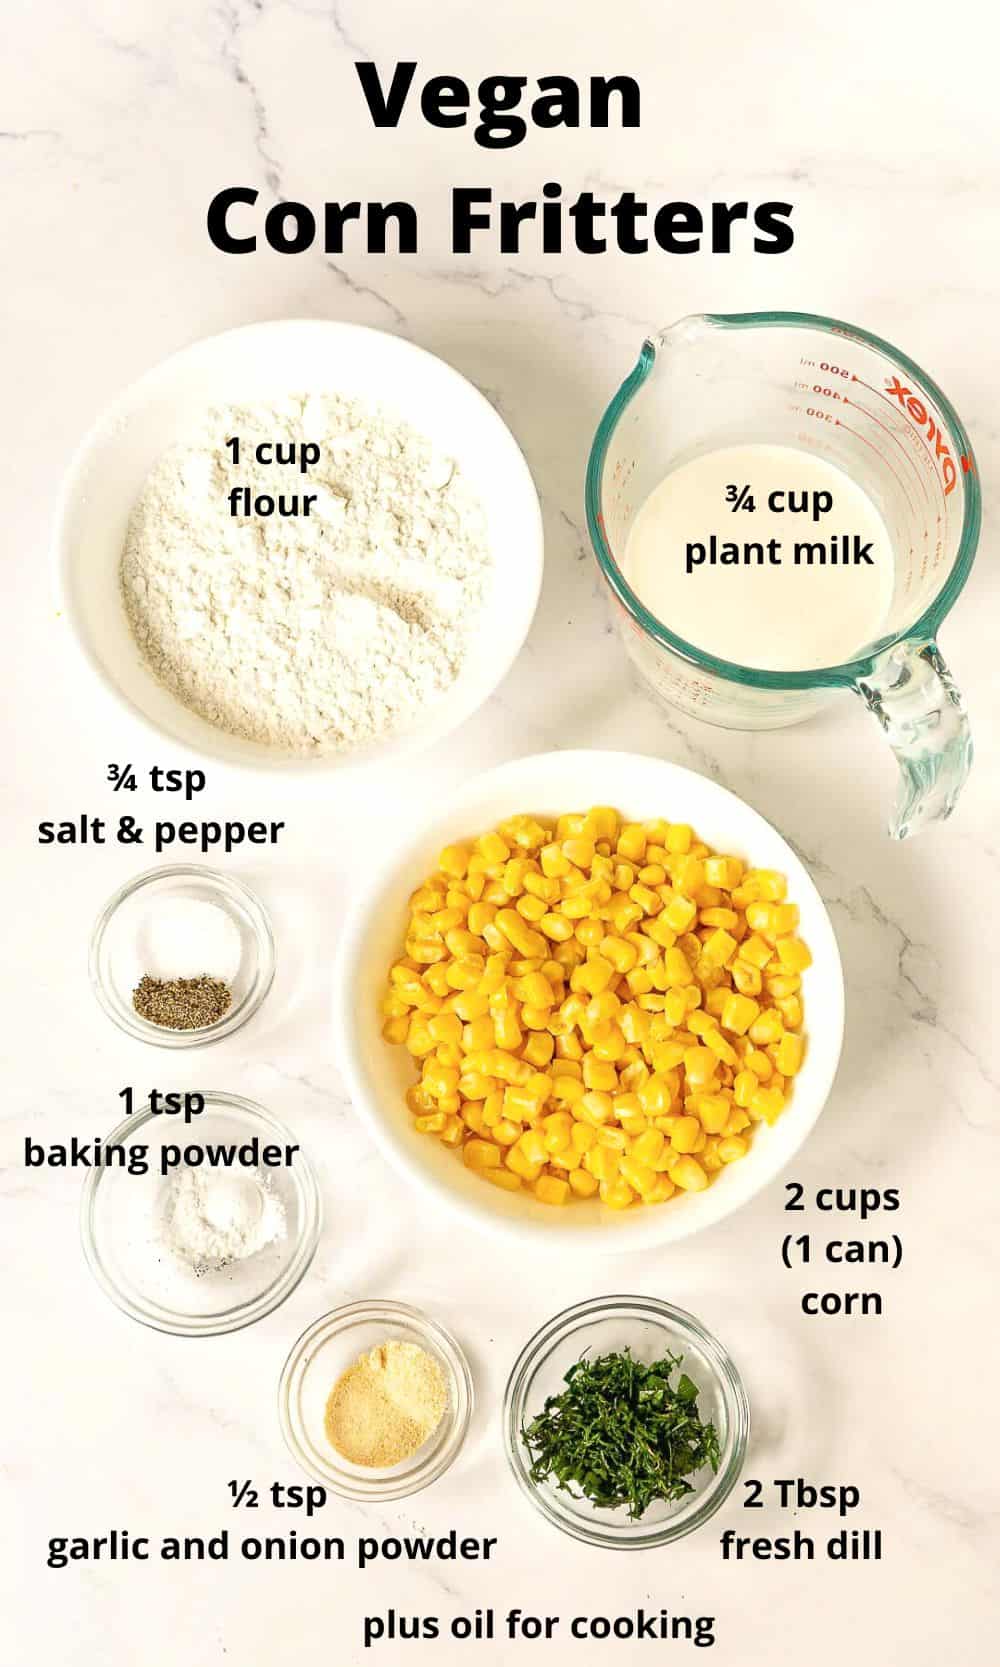 Ingredients for vegan corn fritters